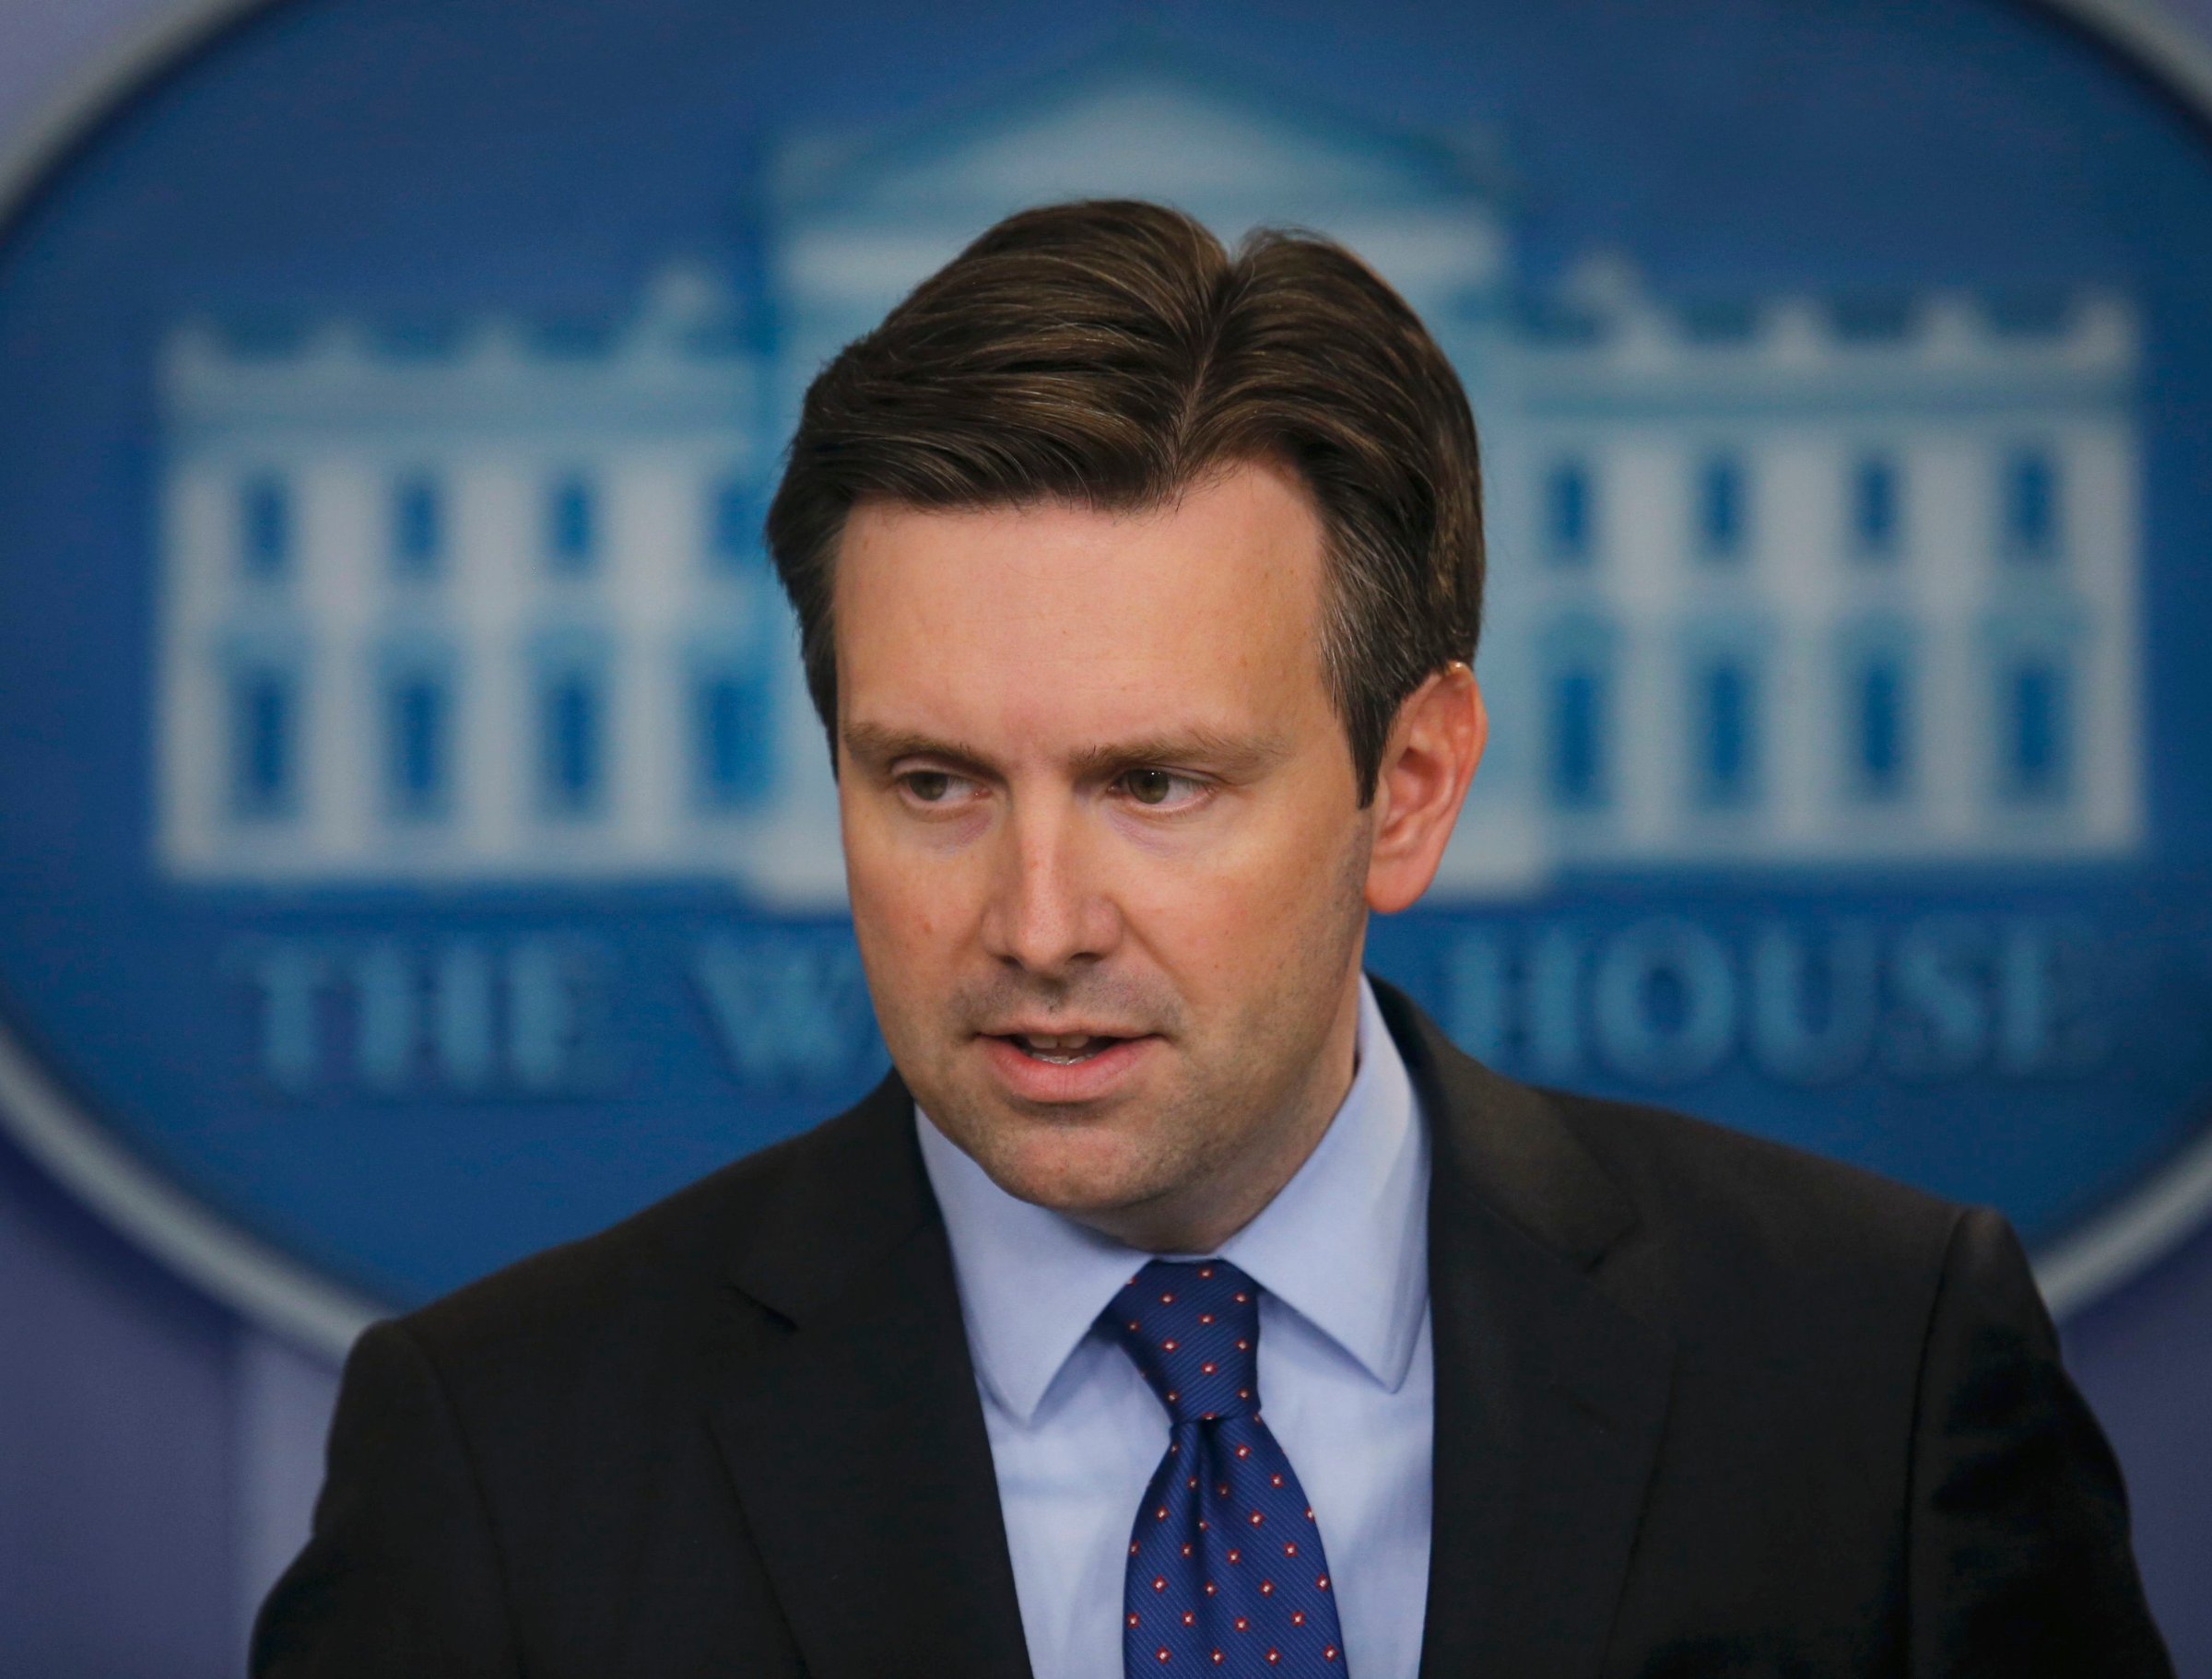 White House spokesman Earnest makes announcement on Syria during White House briefing in Washington